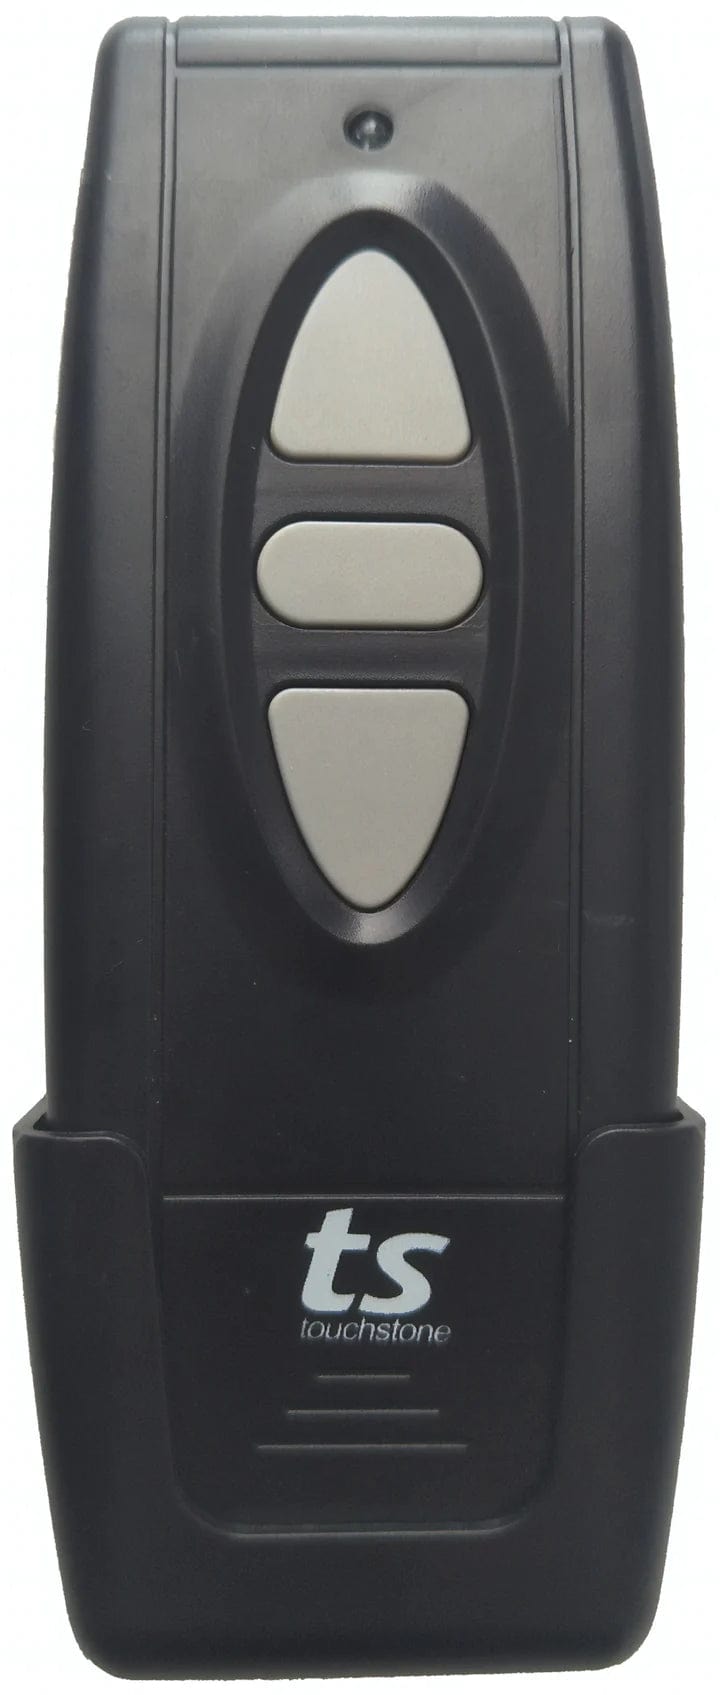 23401 wireless remote